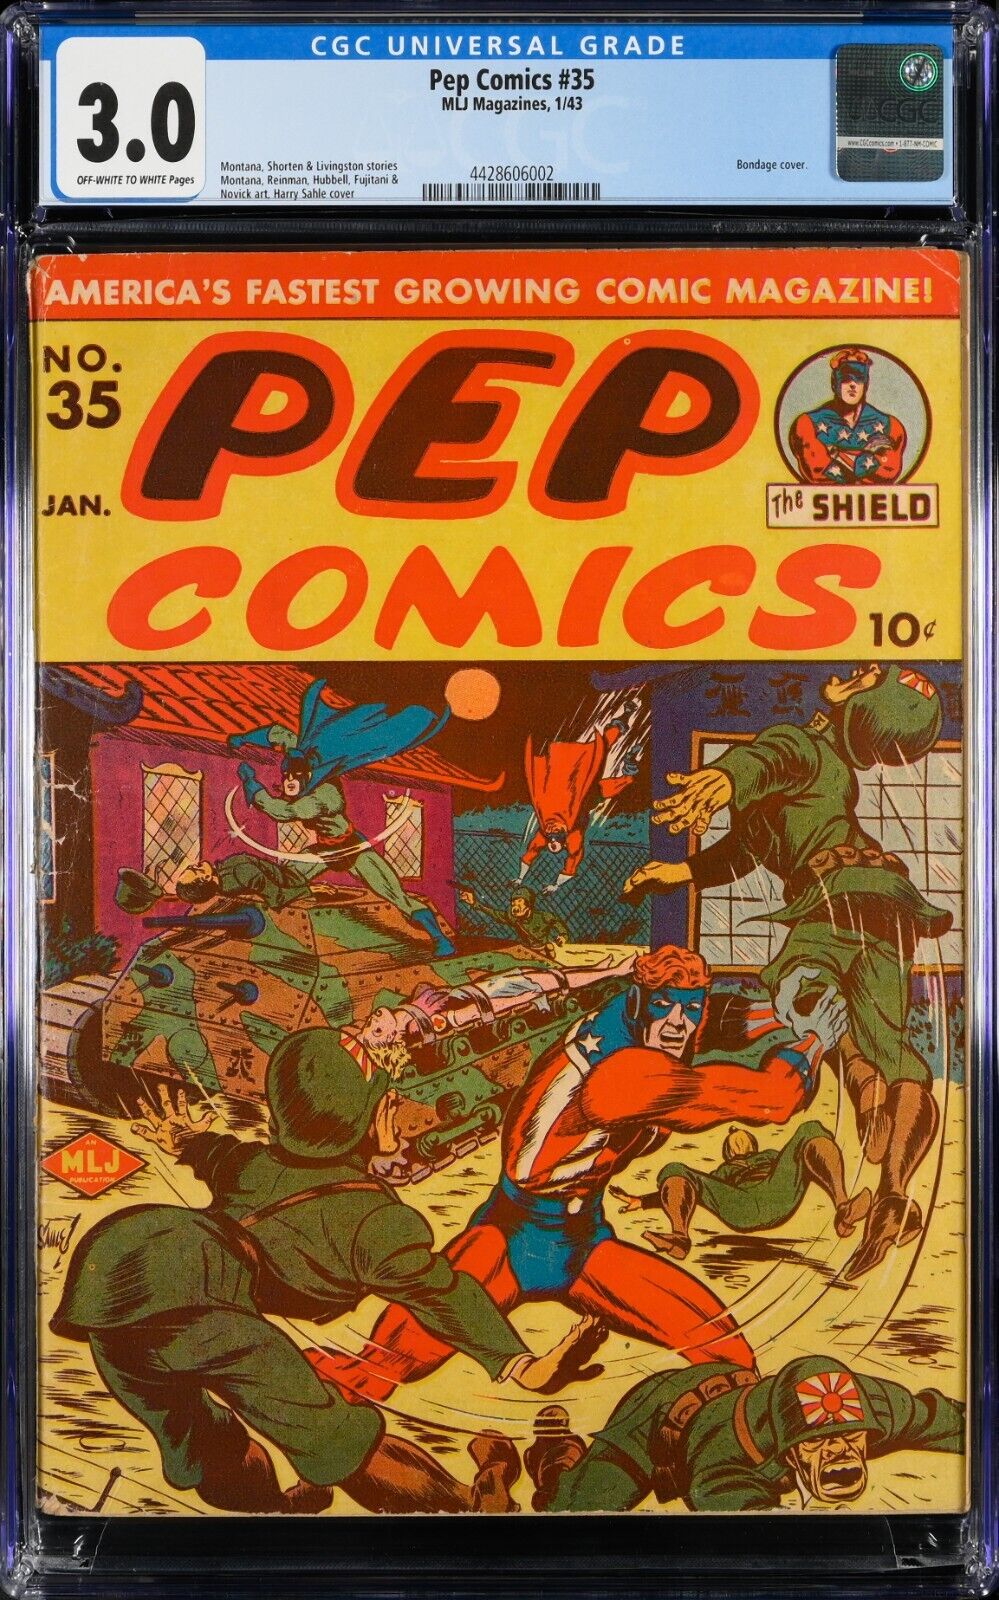 PEP COMICS #35 CGC GVG 3.0 (MLJ 1943) JAPANESE WWII BONDAGE COVER